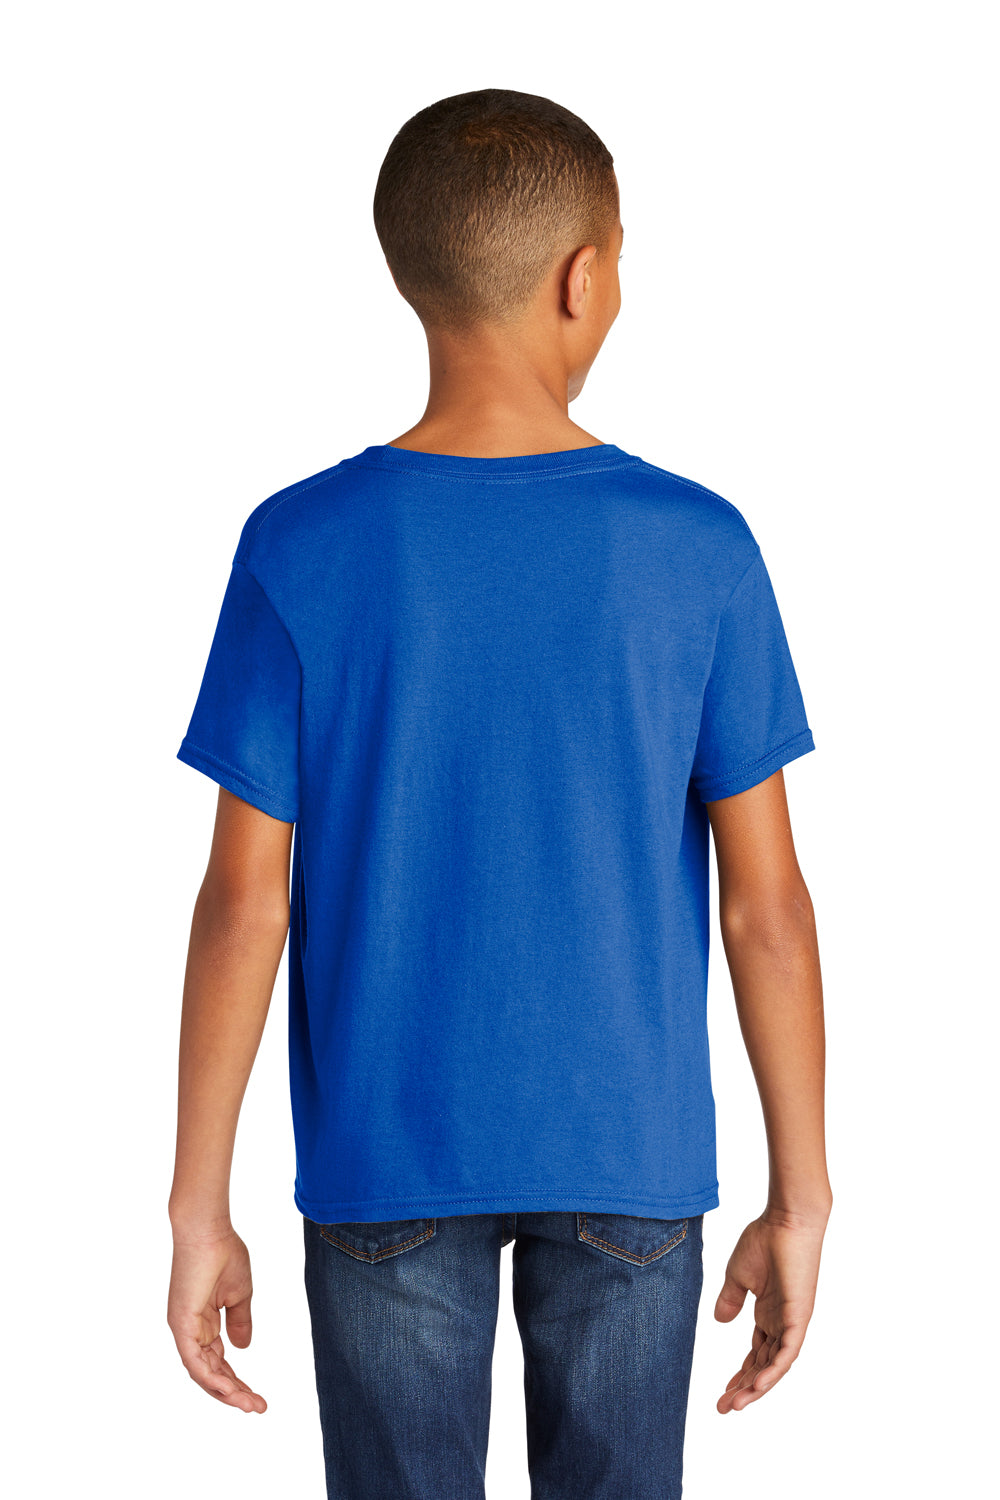 Gildan Youth Softstyle Short Sleeve Crewneck T-Shirt Royal Blue Back